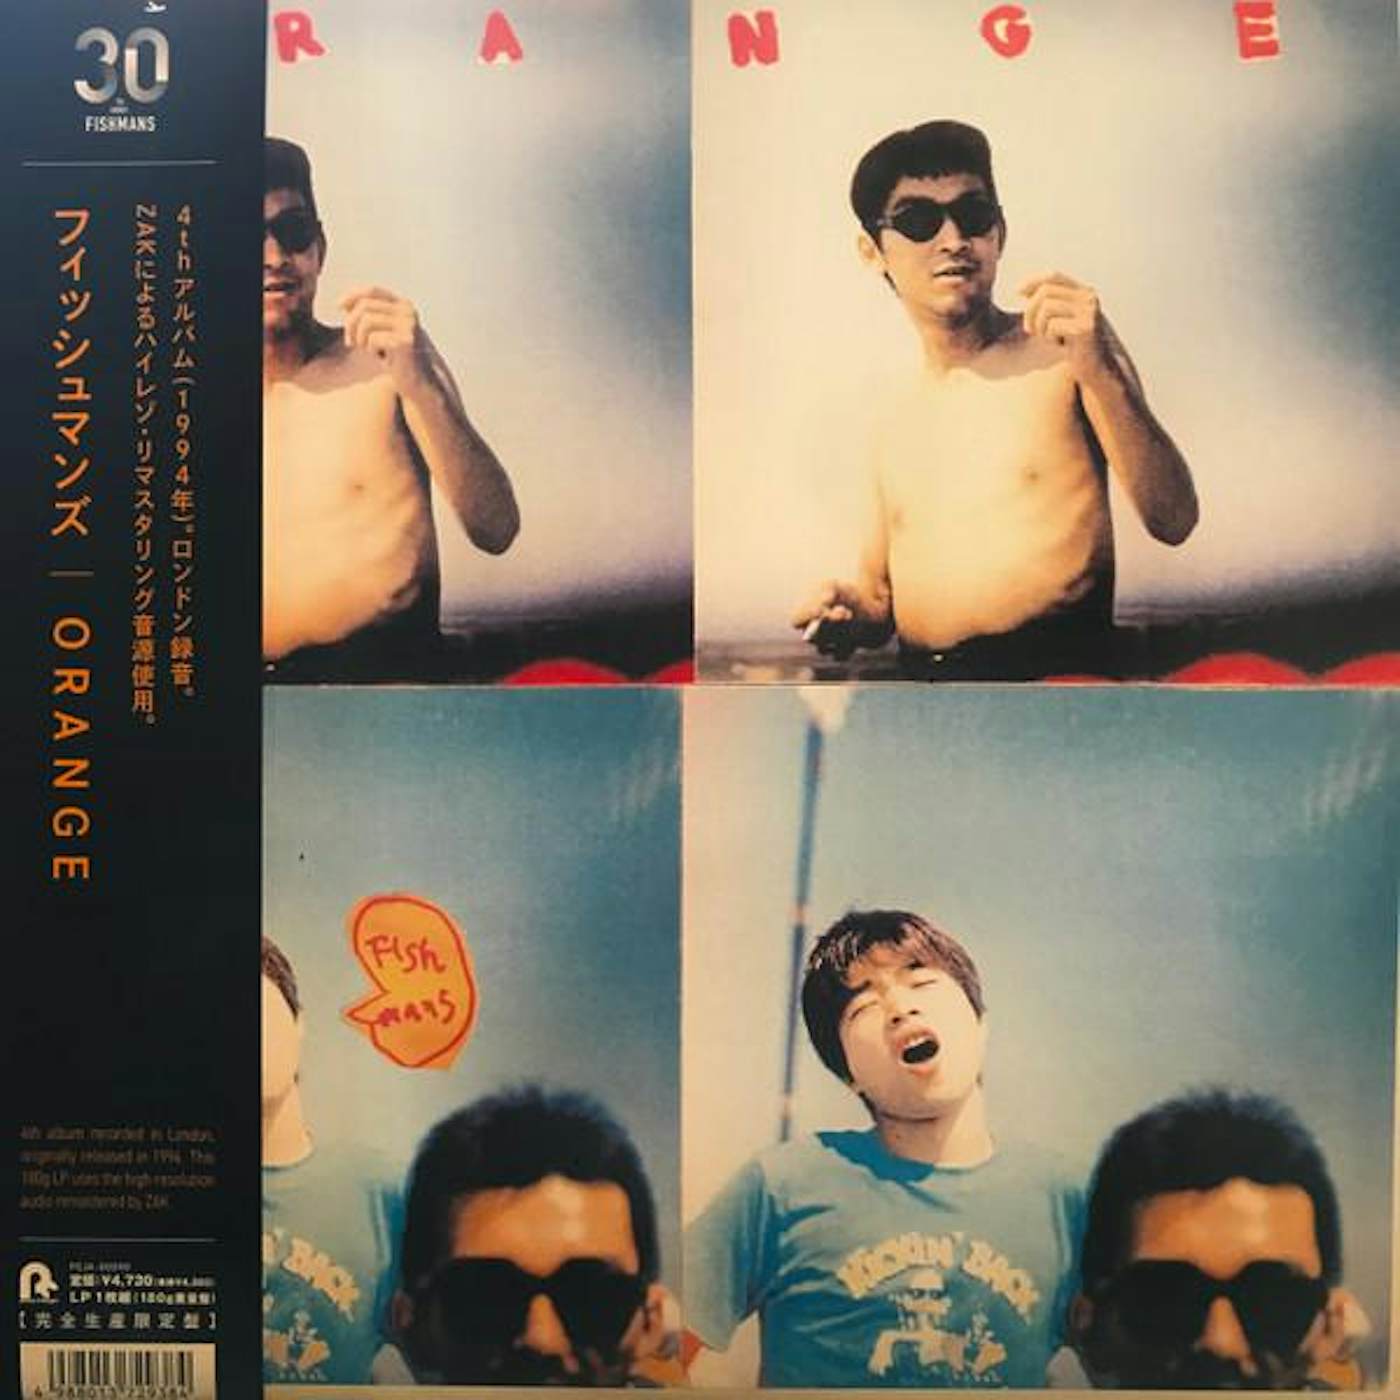 ORANGE Vinyl Record - Fishmans